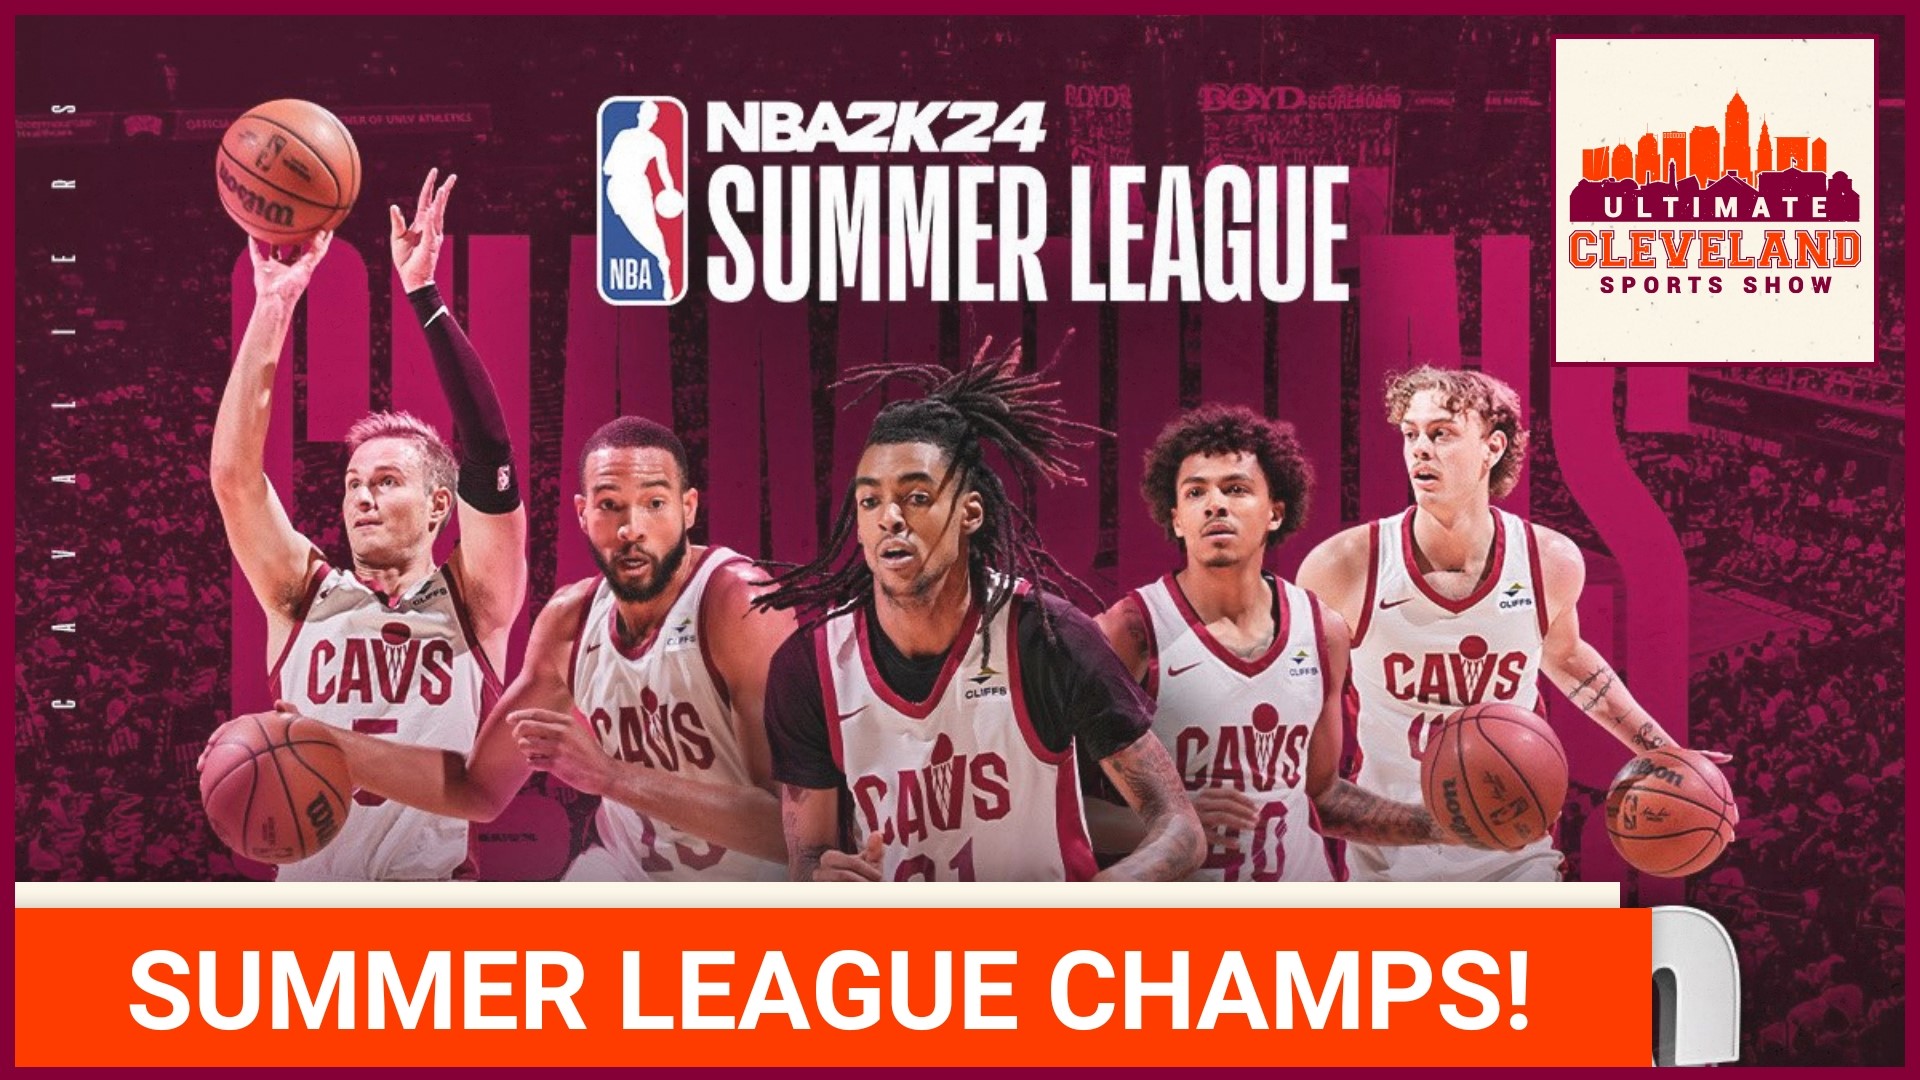 Cavaliers win NBA Summer League championship over Rockets behind